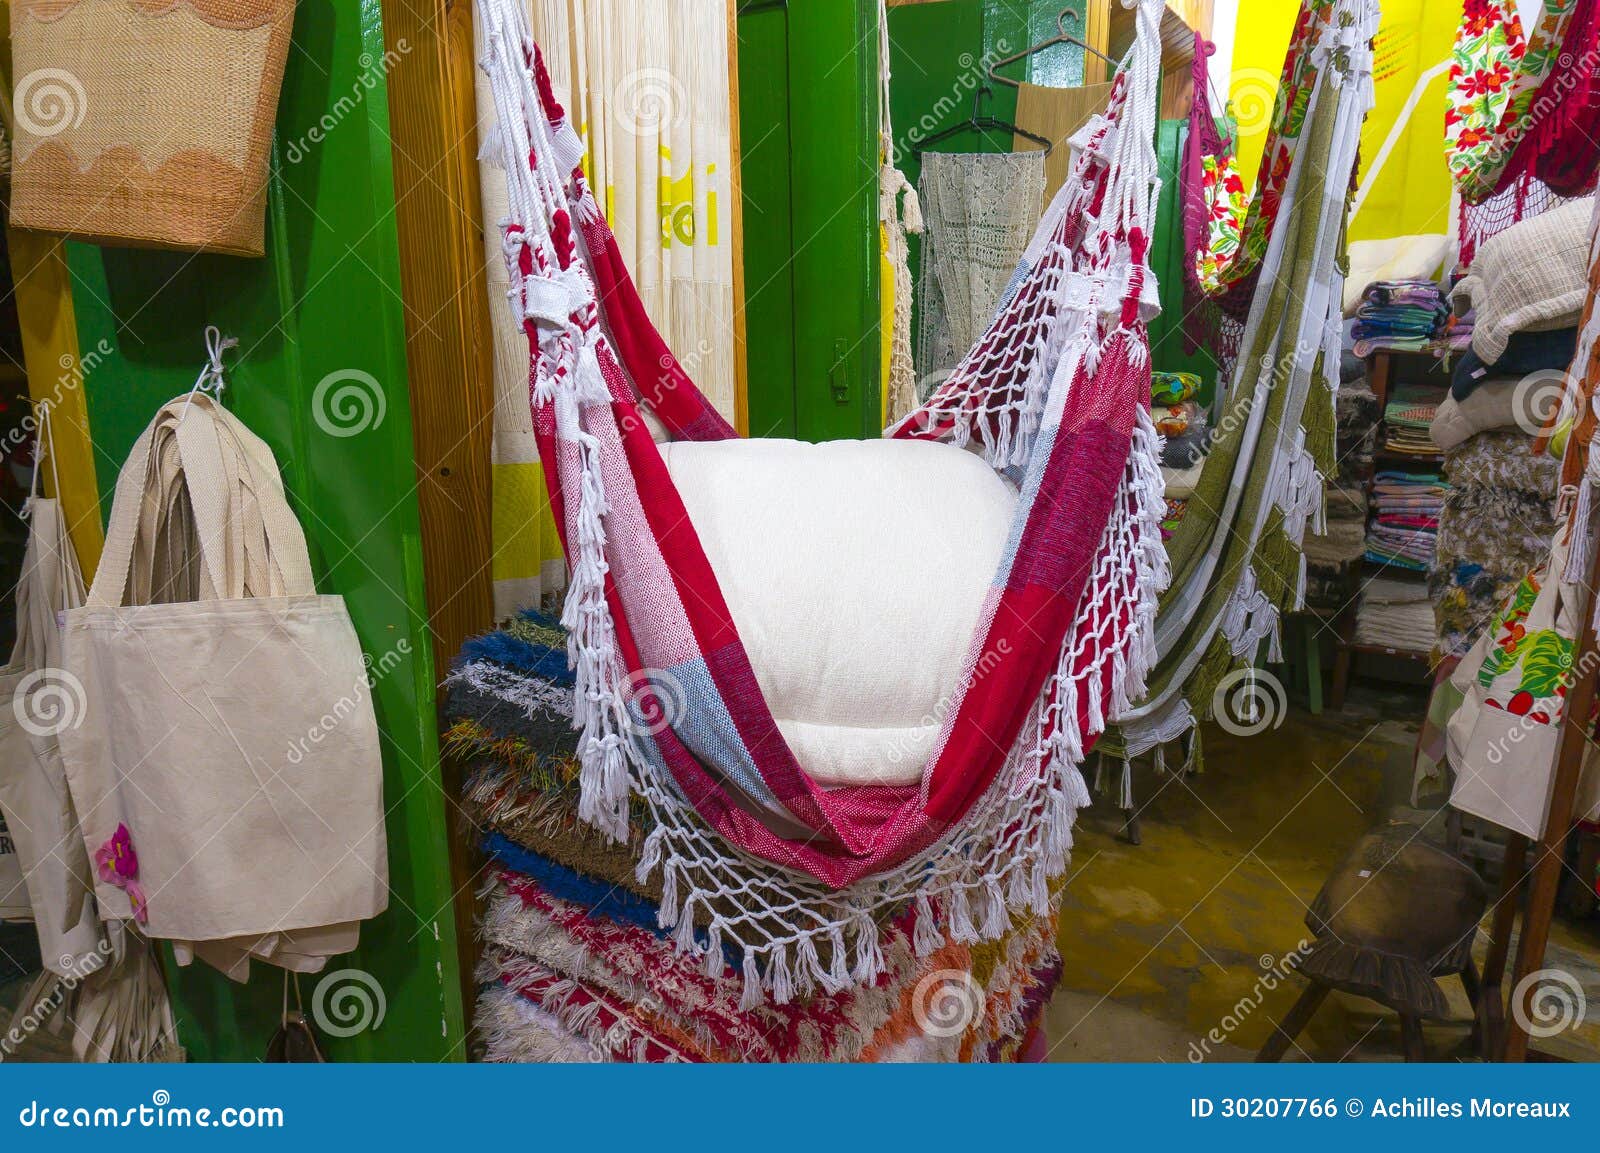 textile souvenir store in paraty